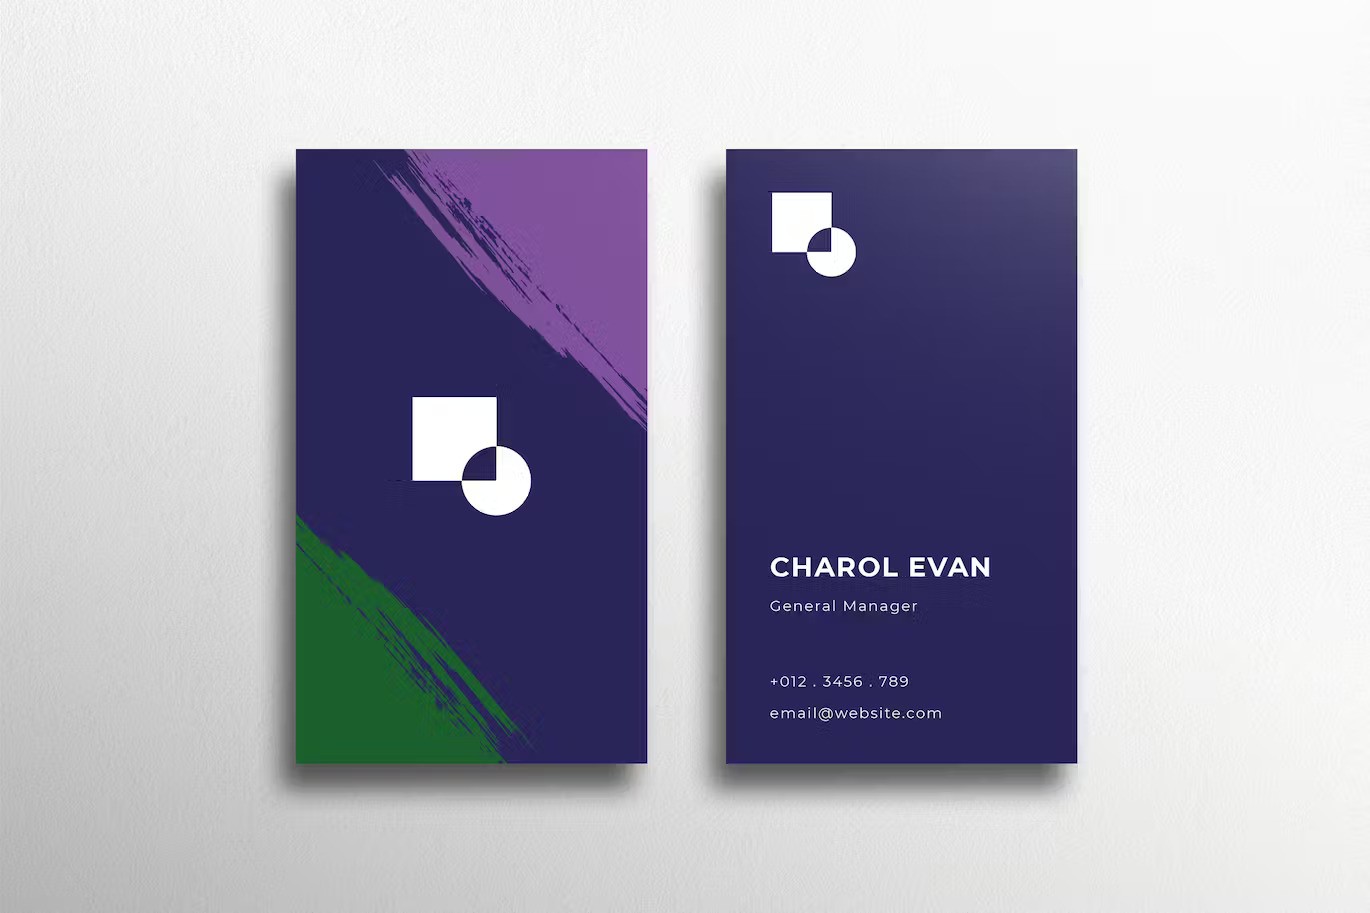 A purple business card template